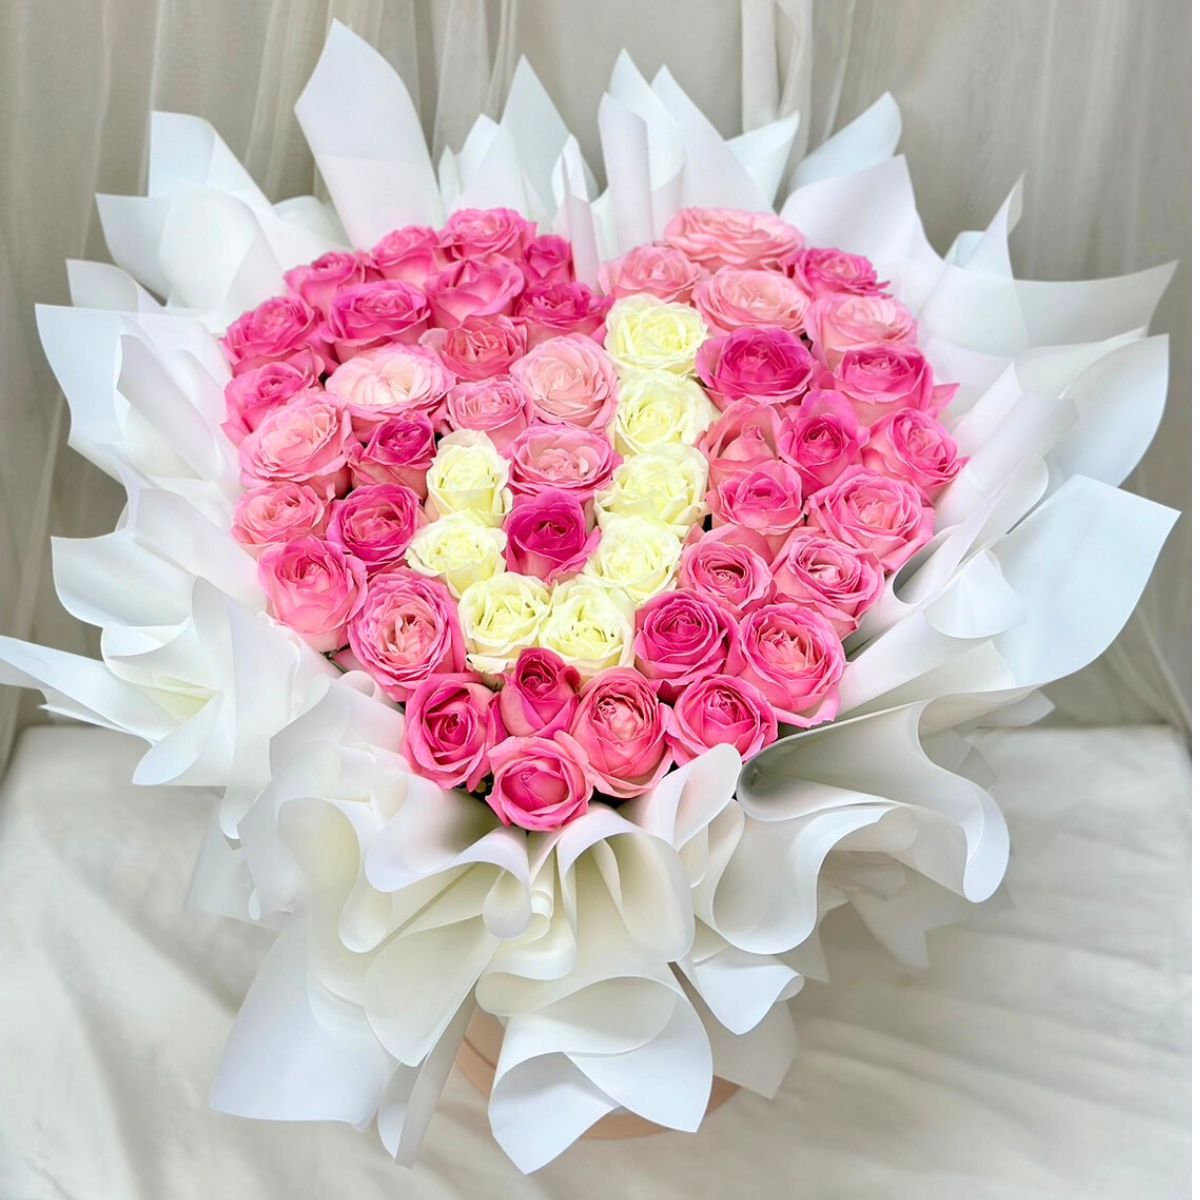 Customized 'Heart You' Flower Box